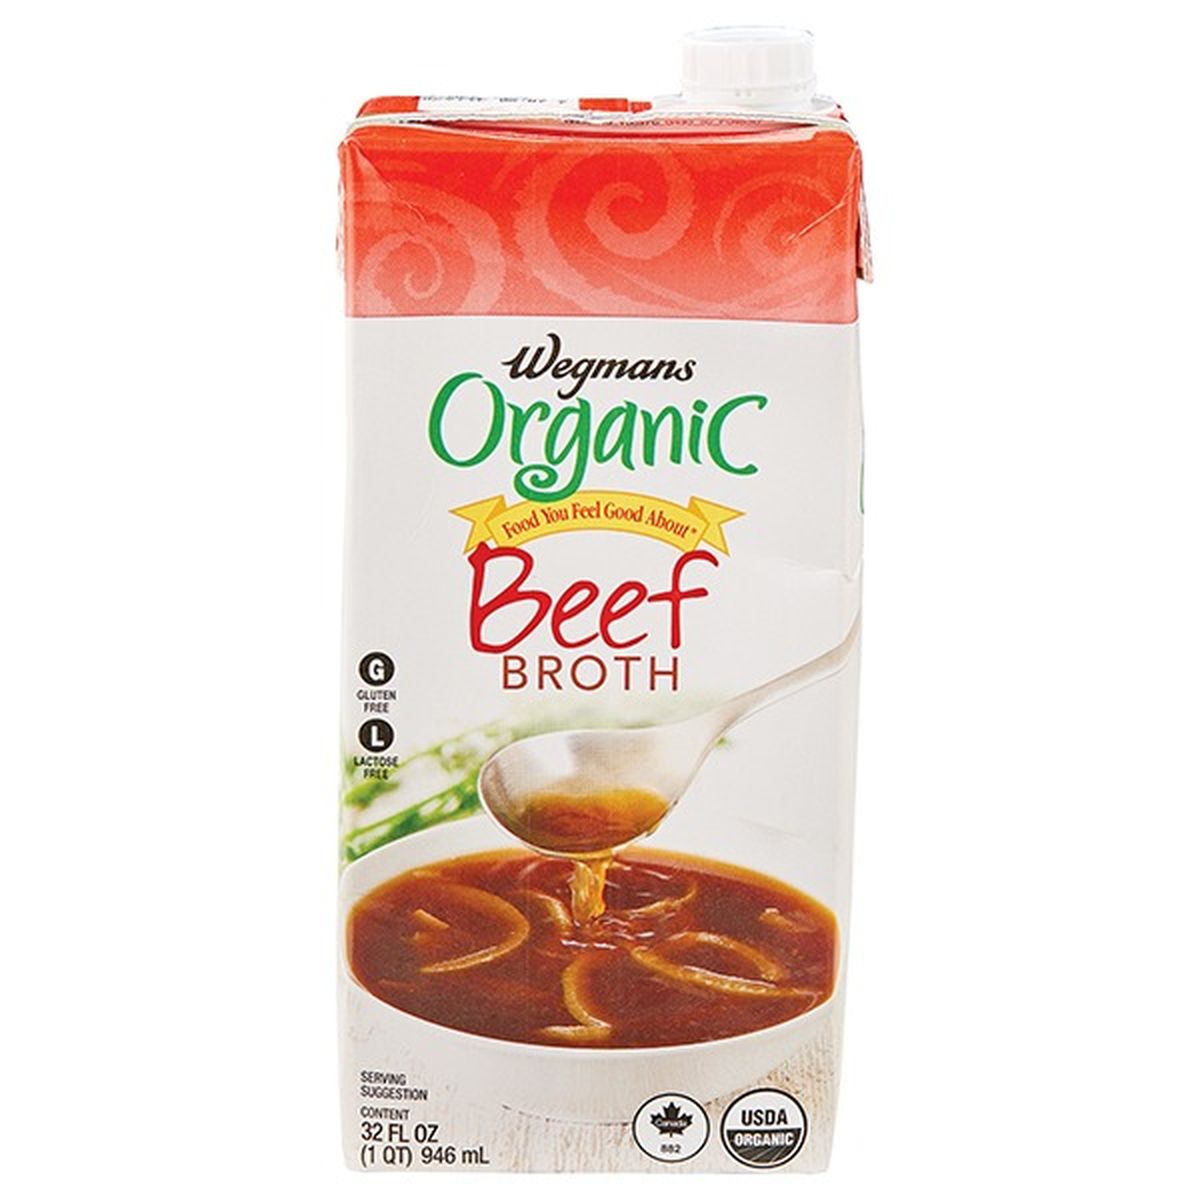 Calories in Wegmans Organic Beef Broth